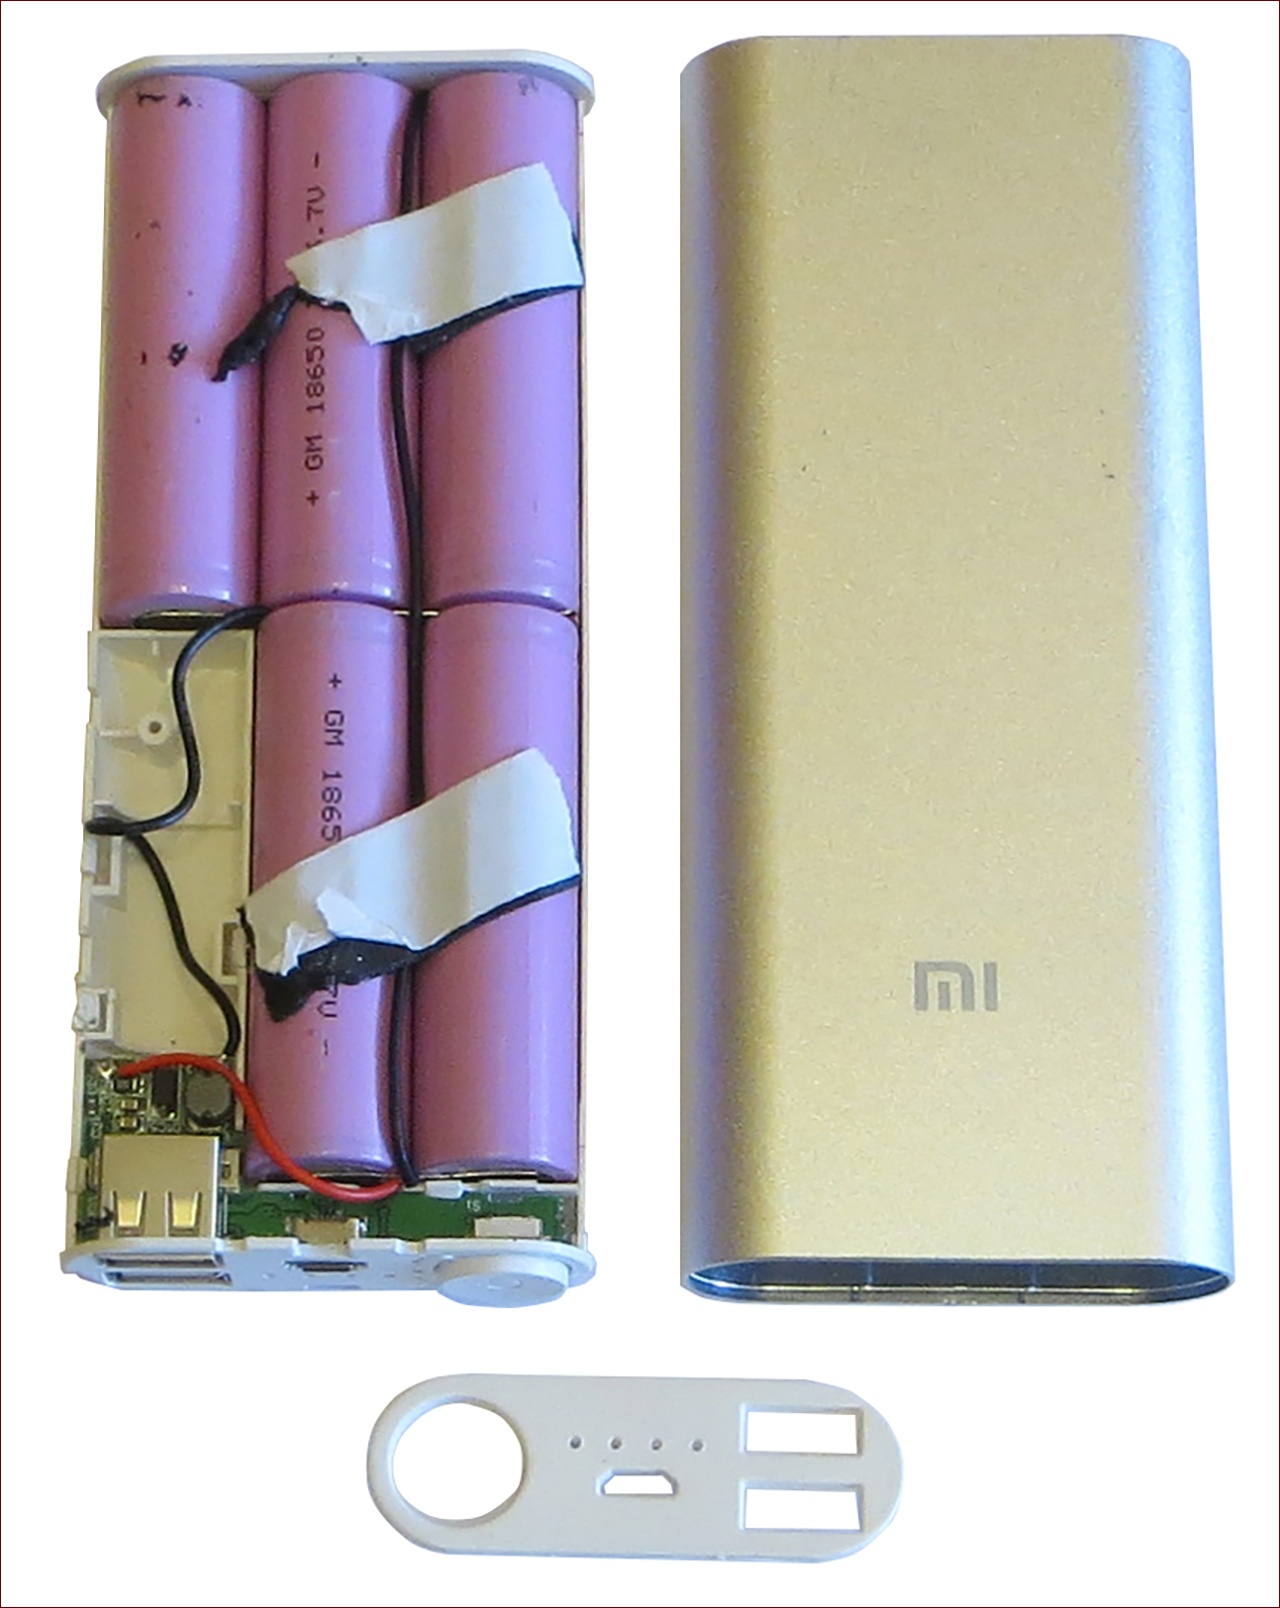 Внешние аккумуляторы HIPER и Xiaomi Mi — взгляд дилетанта - 60